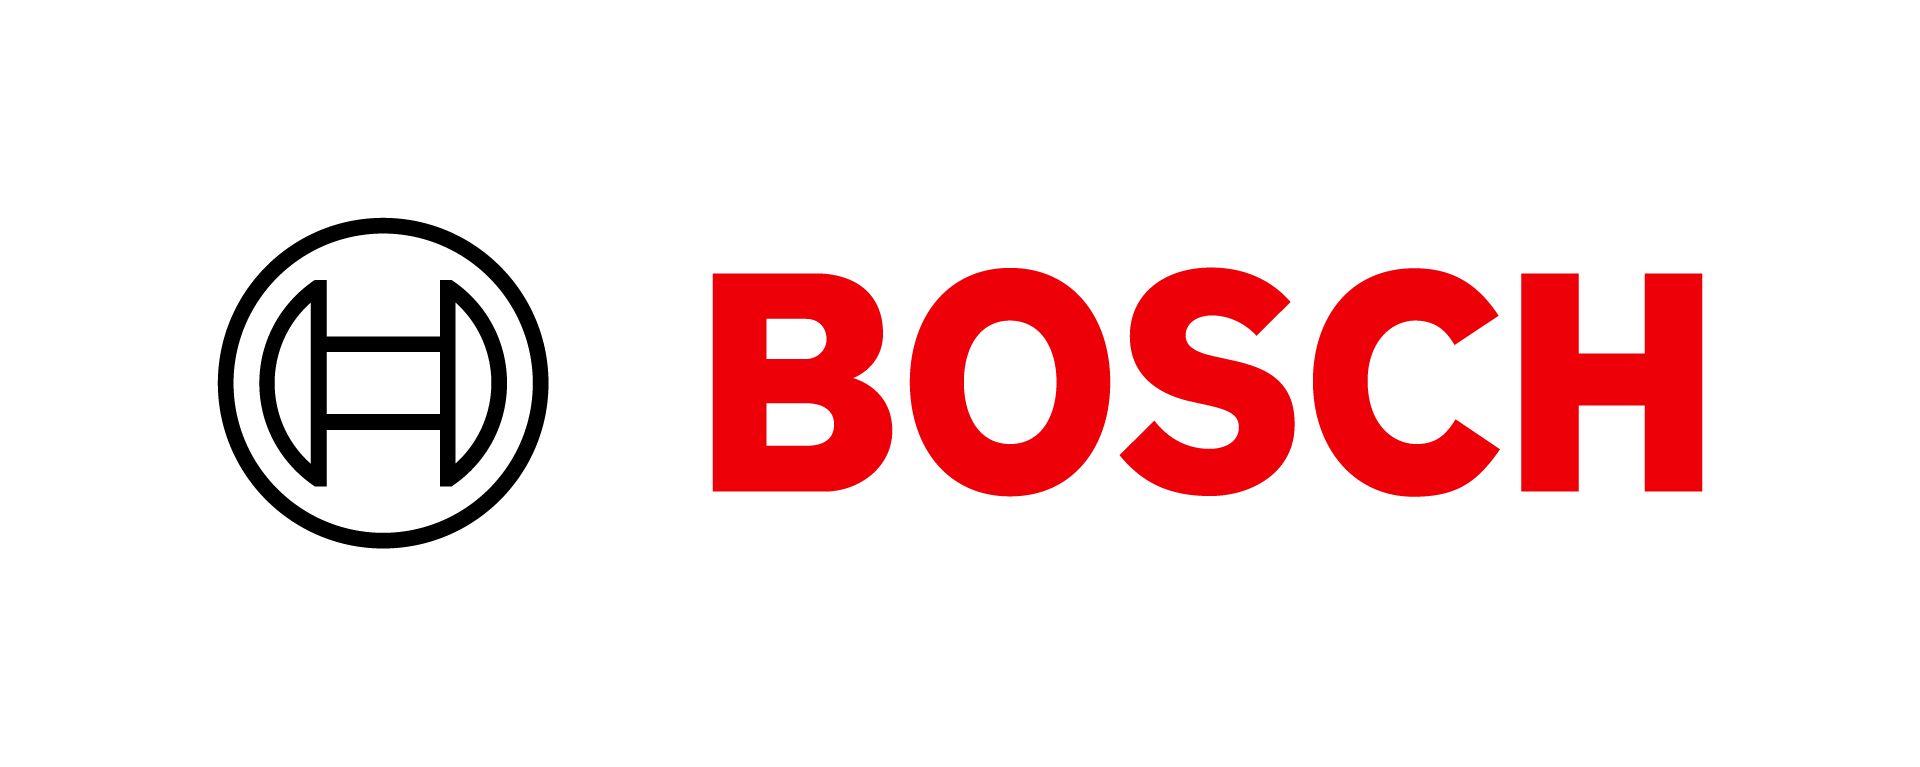 Bosch_symbol_logo_black_red(5).png